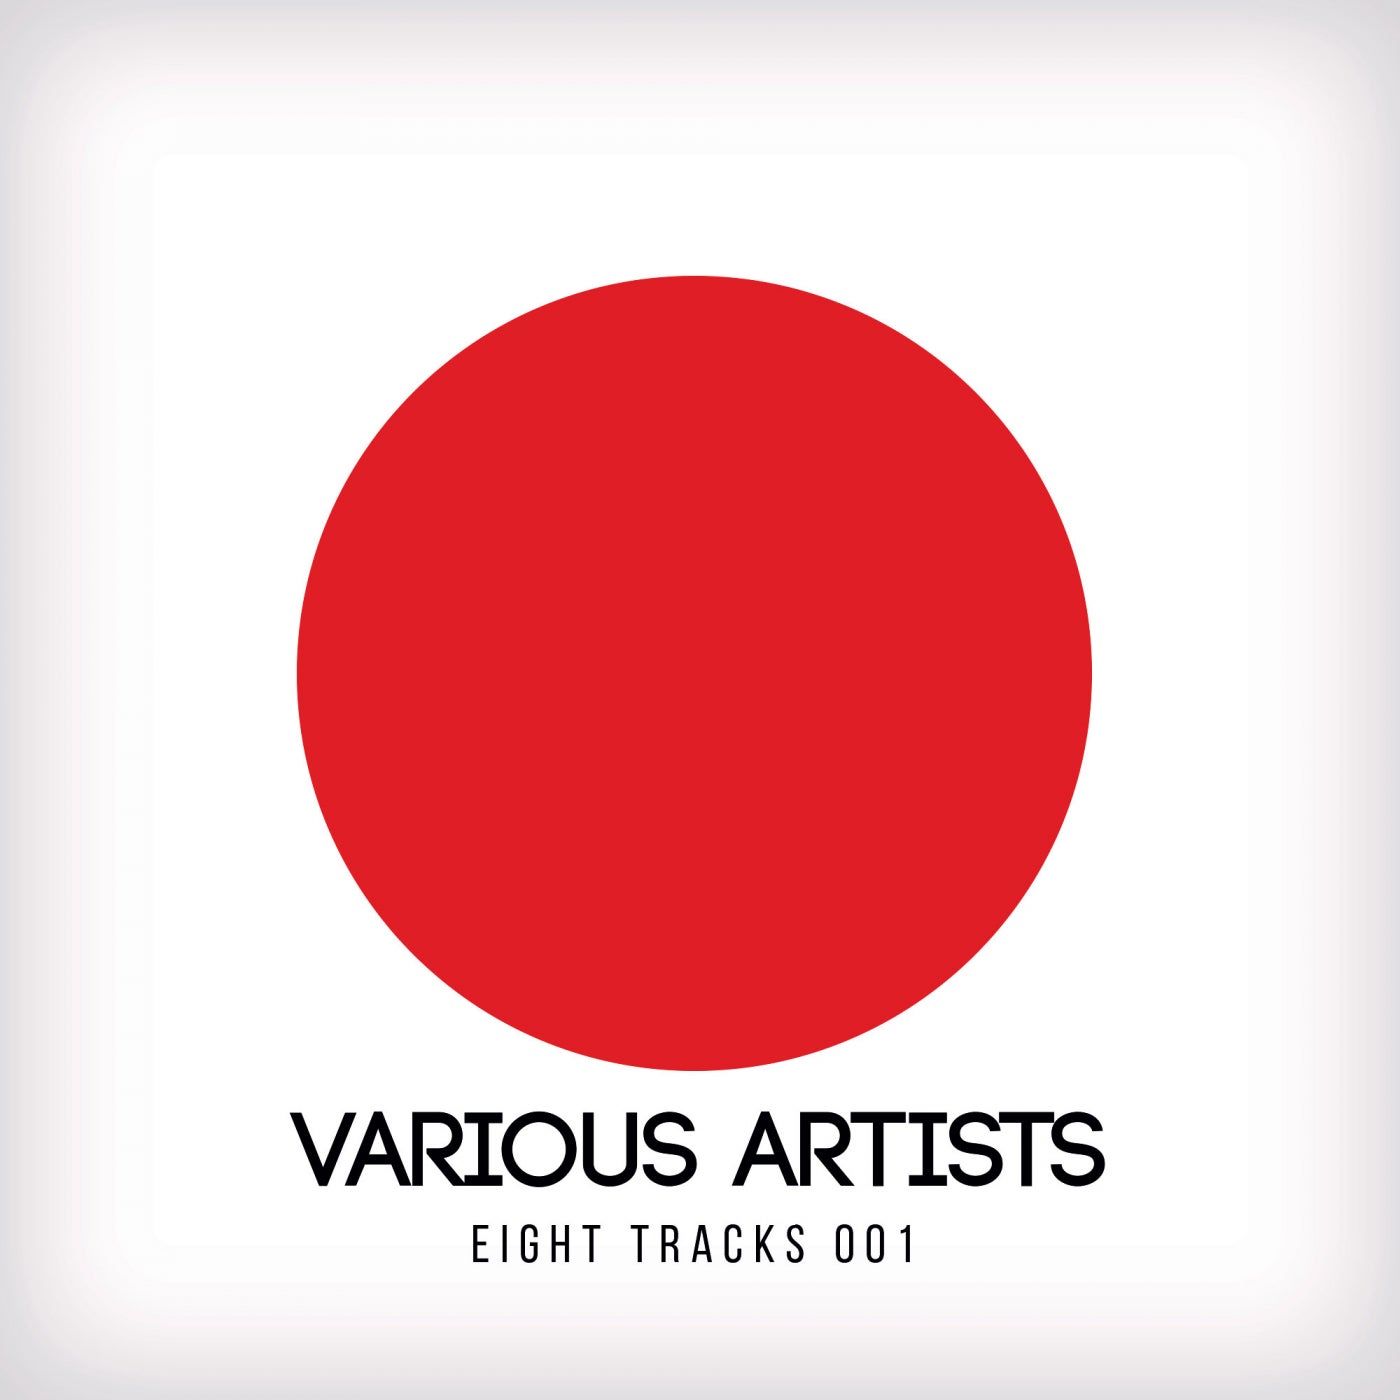 Eight Tracks 001